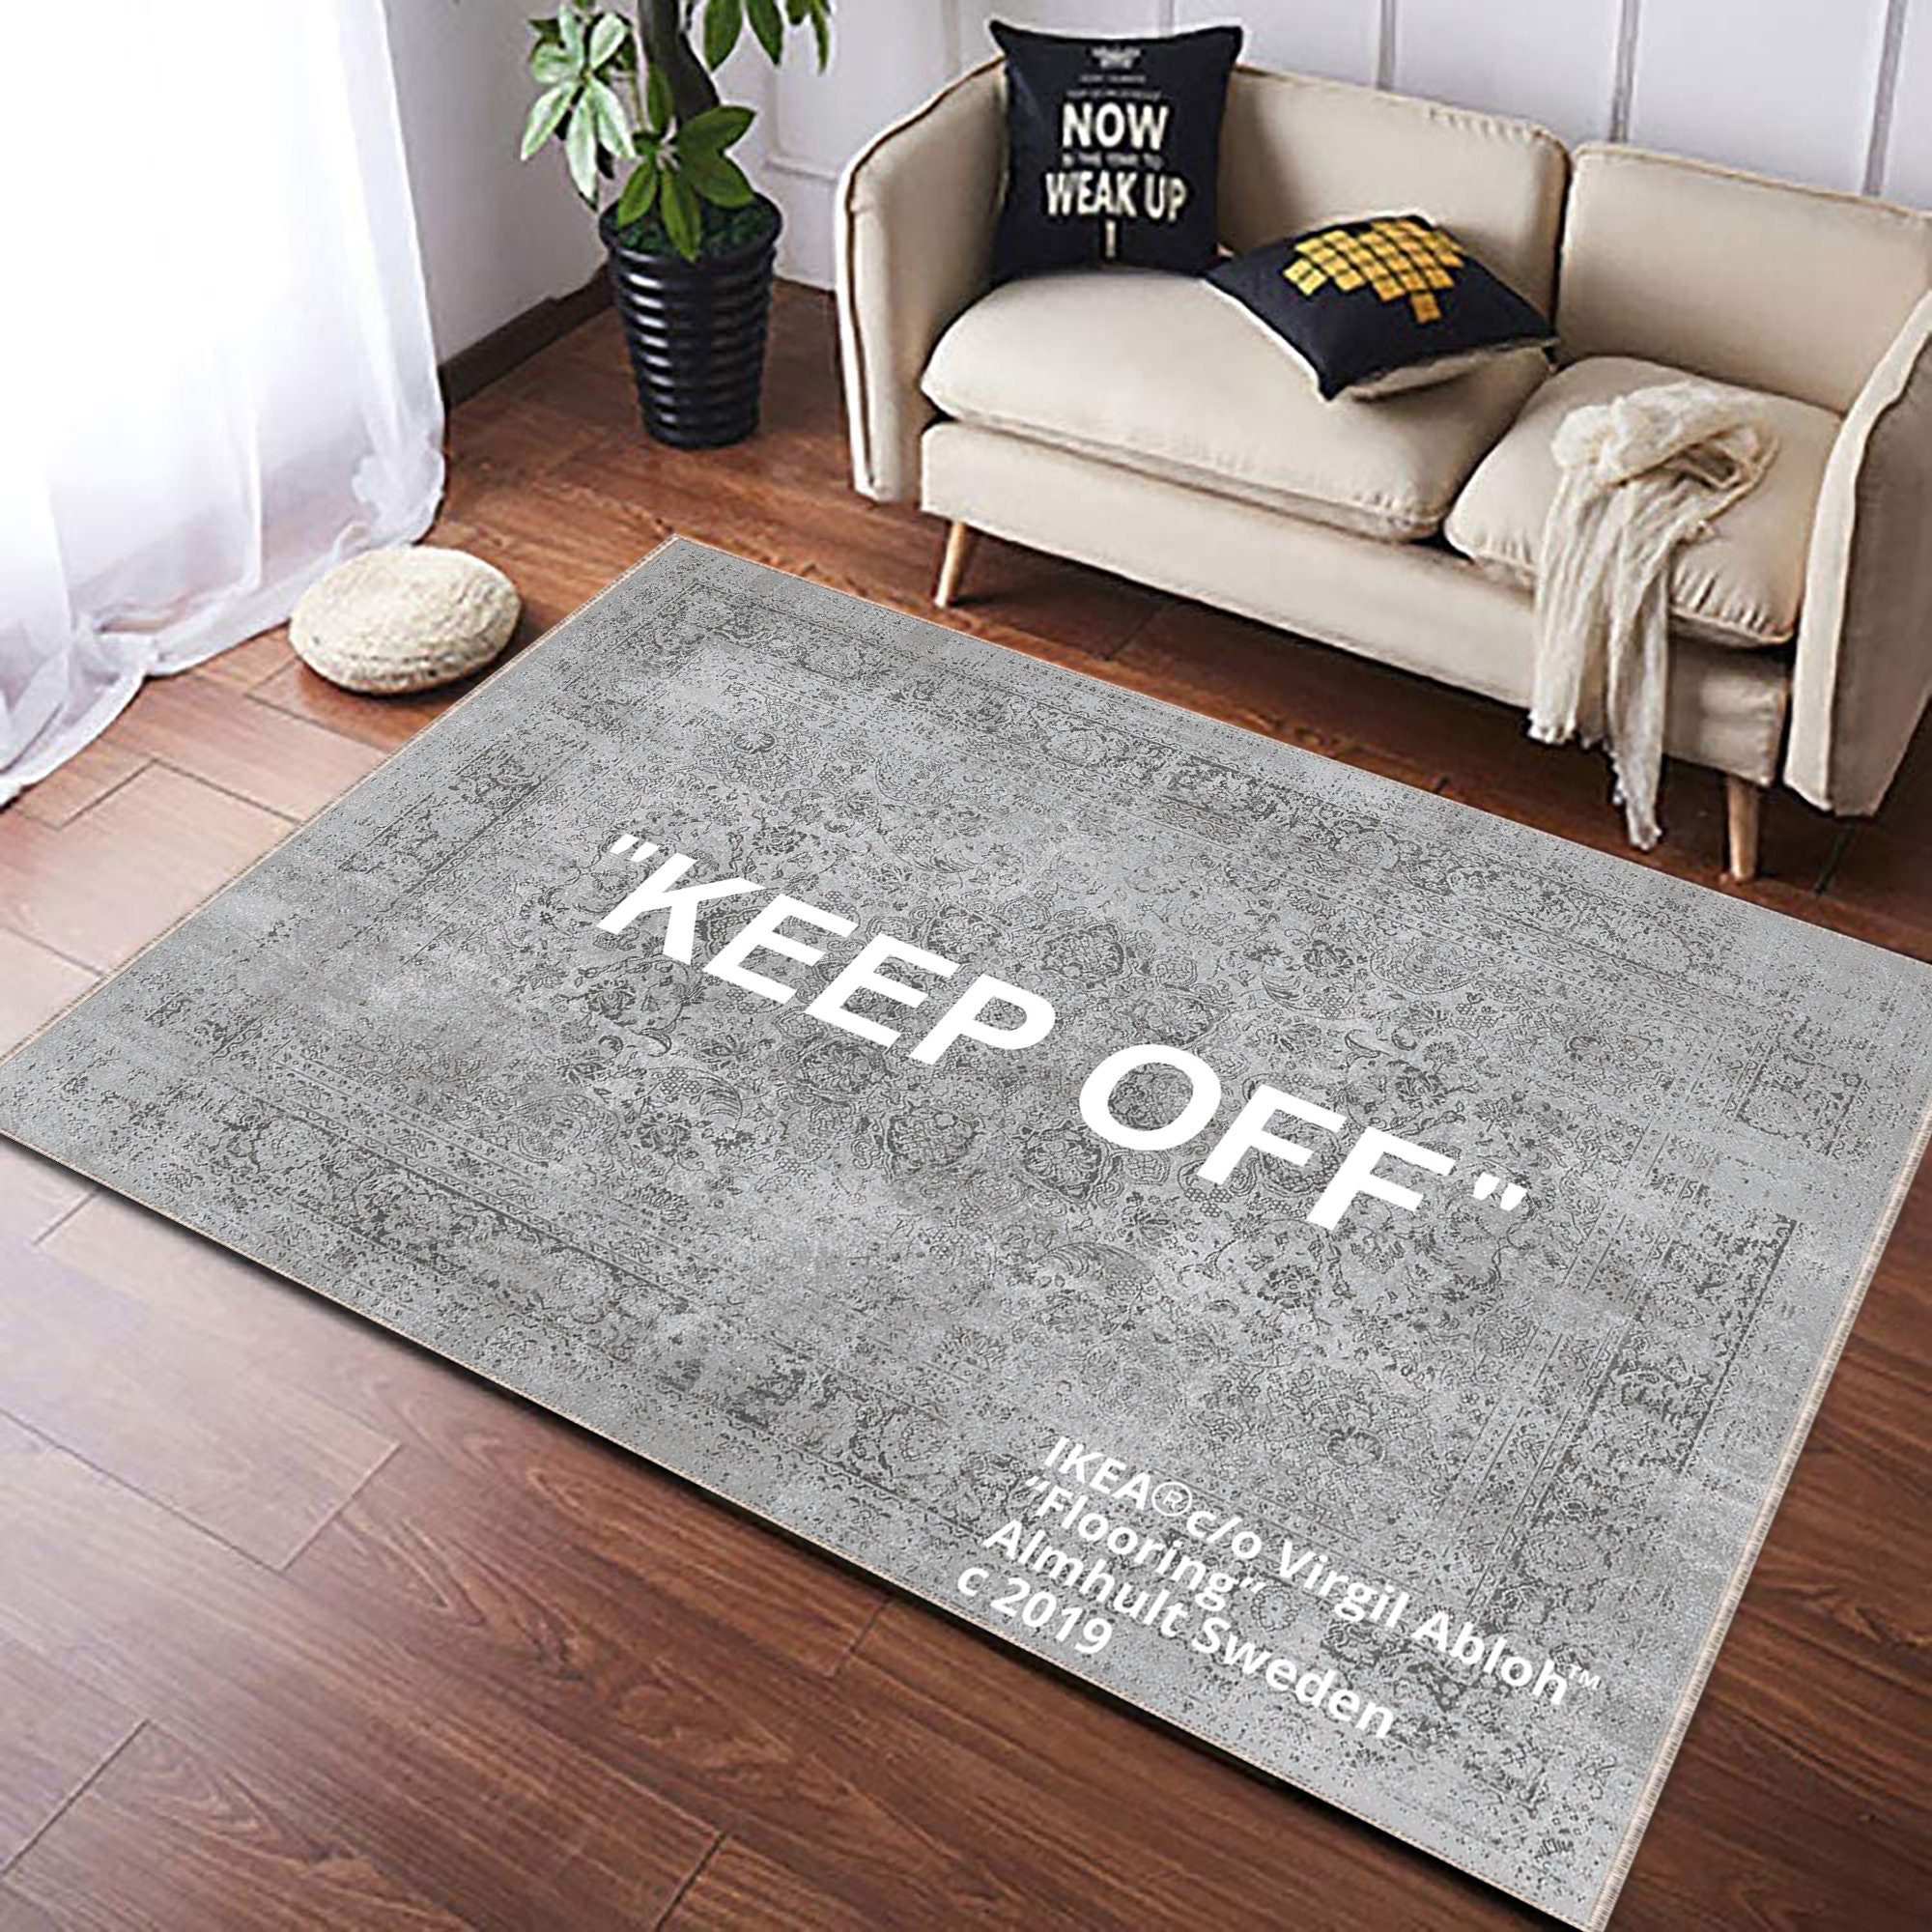 Keep off Carpet -  UK